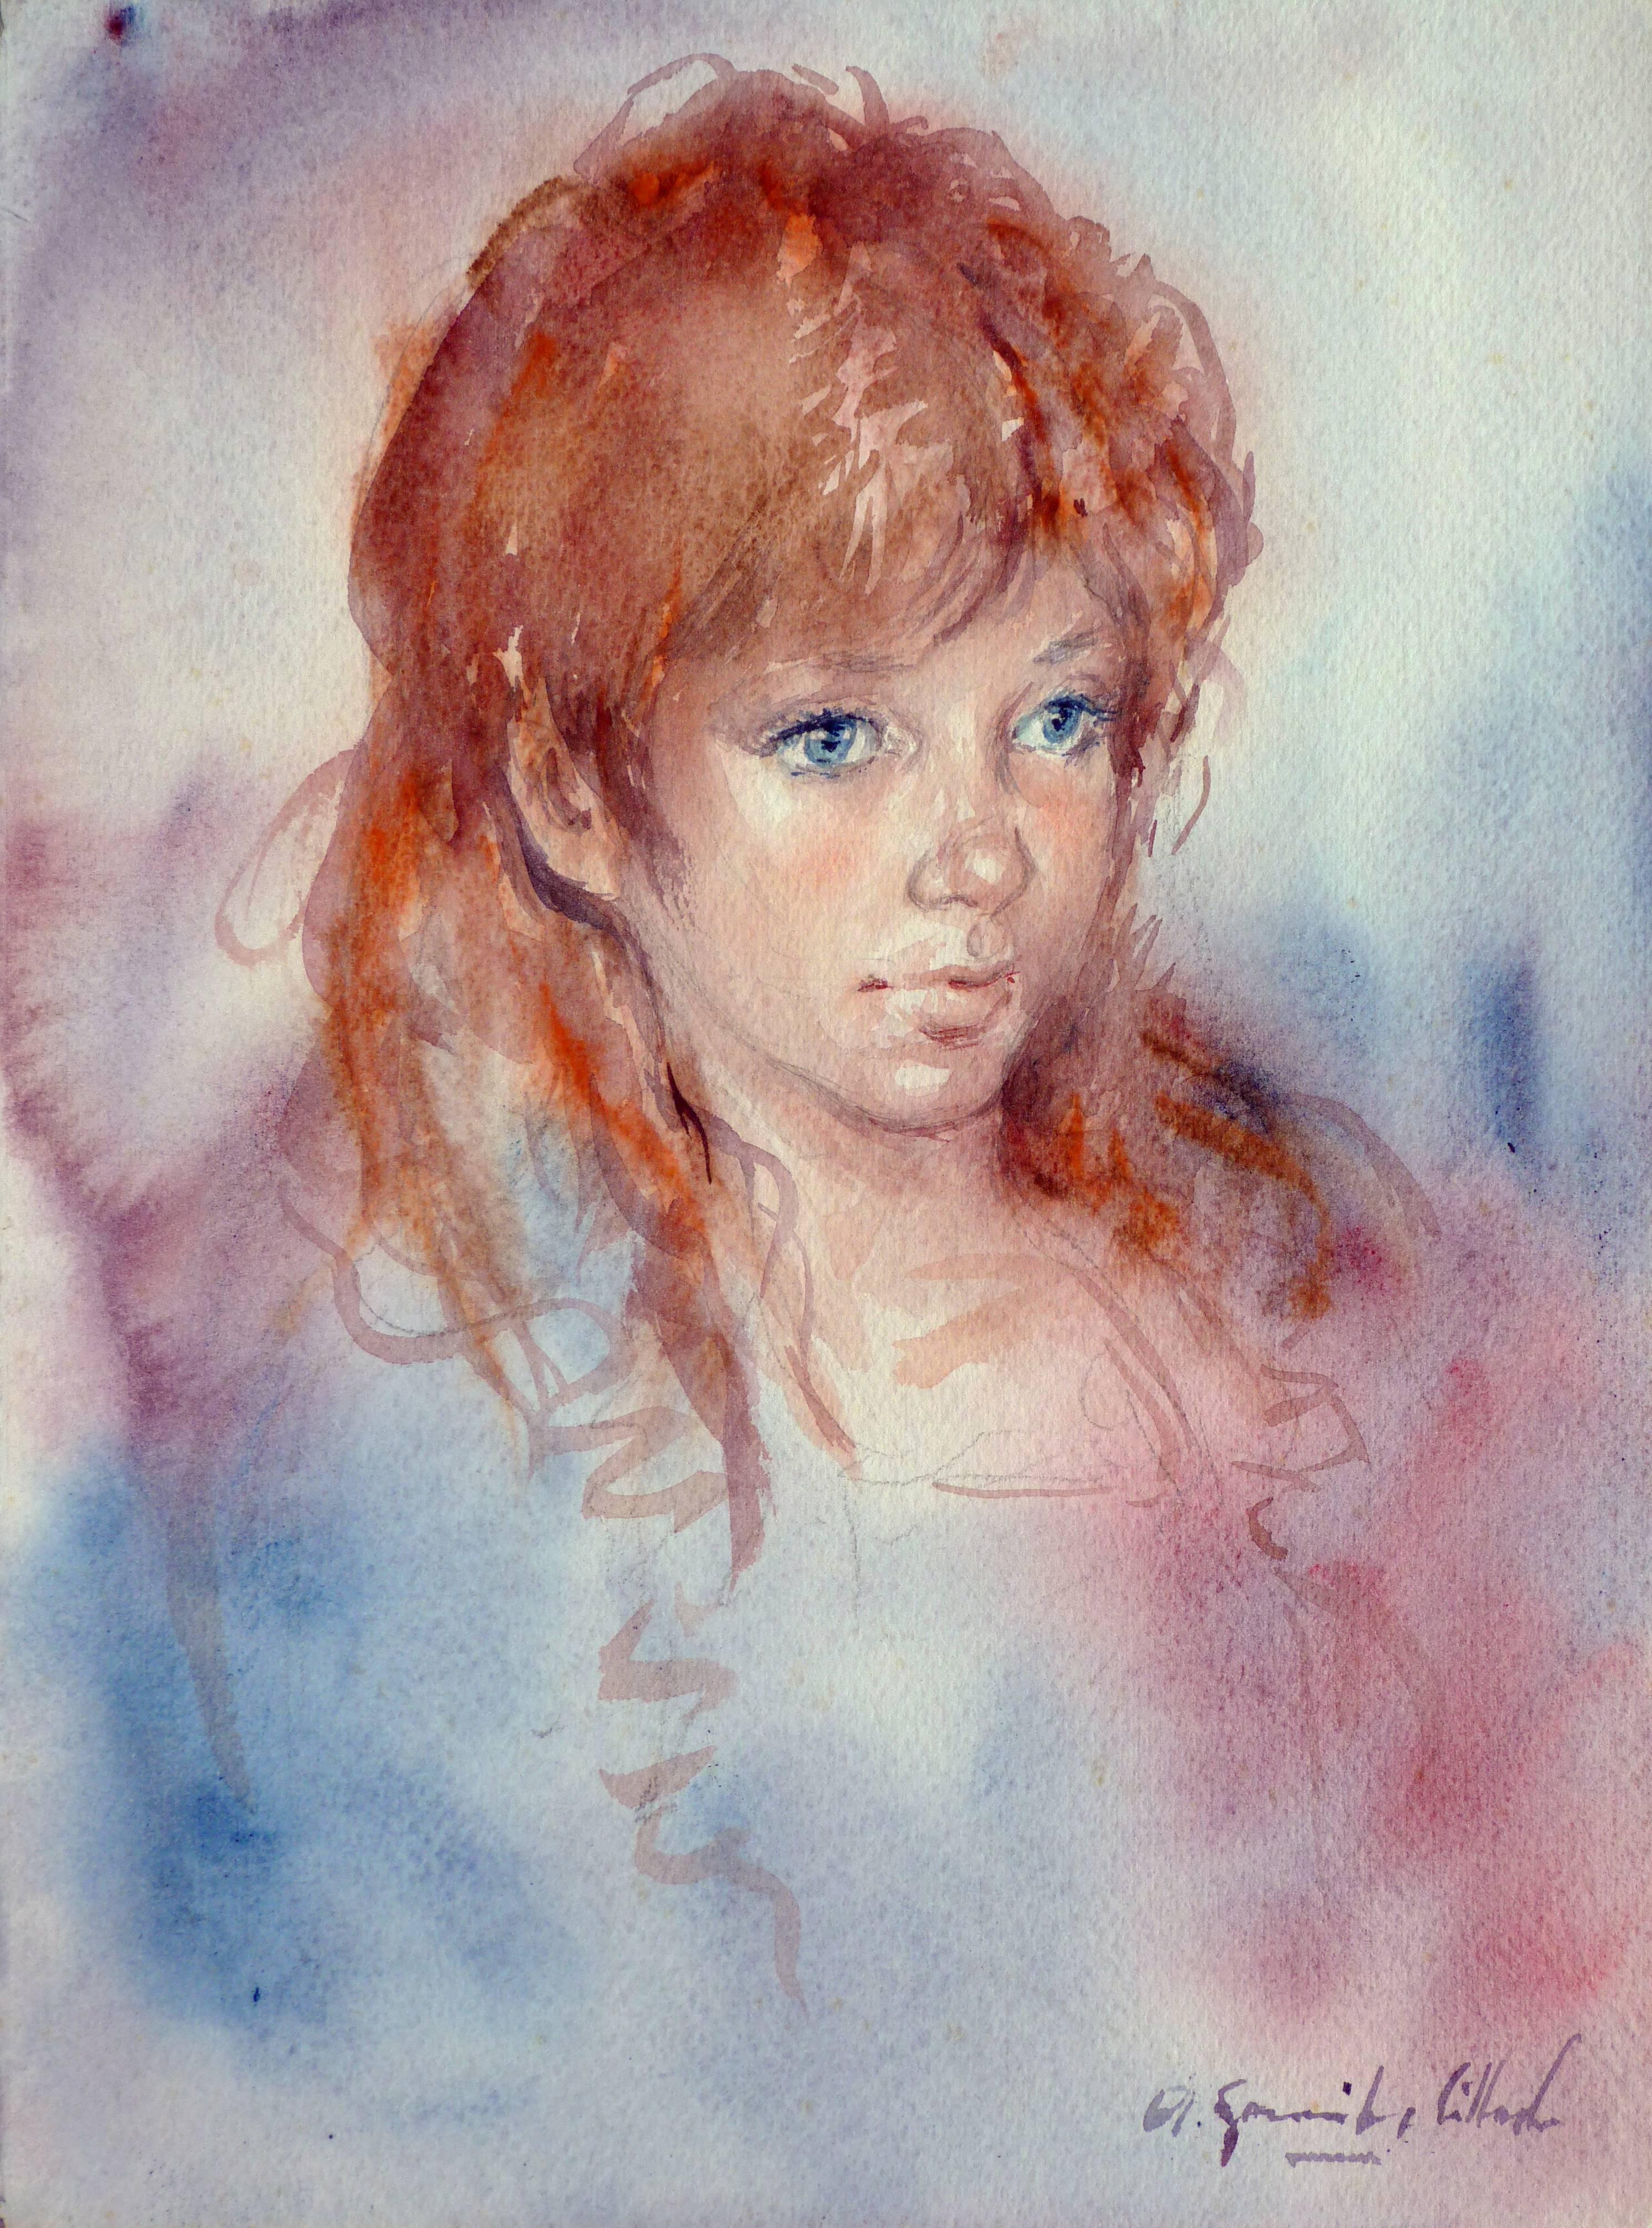 Antonio Gonzalez Collado Portrait - The red hair young lady